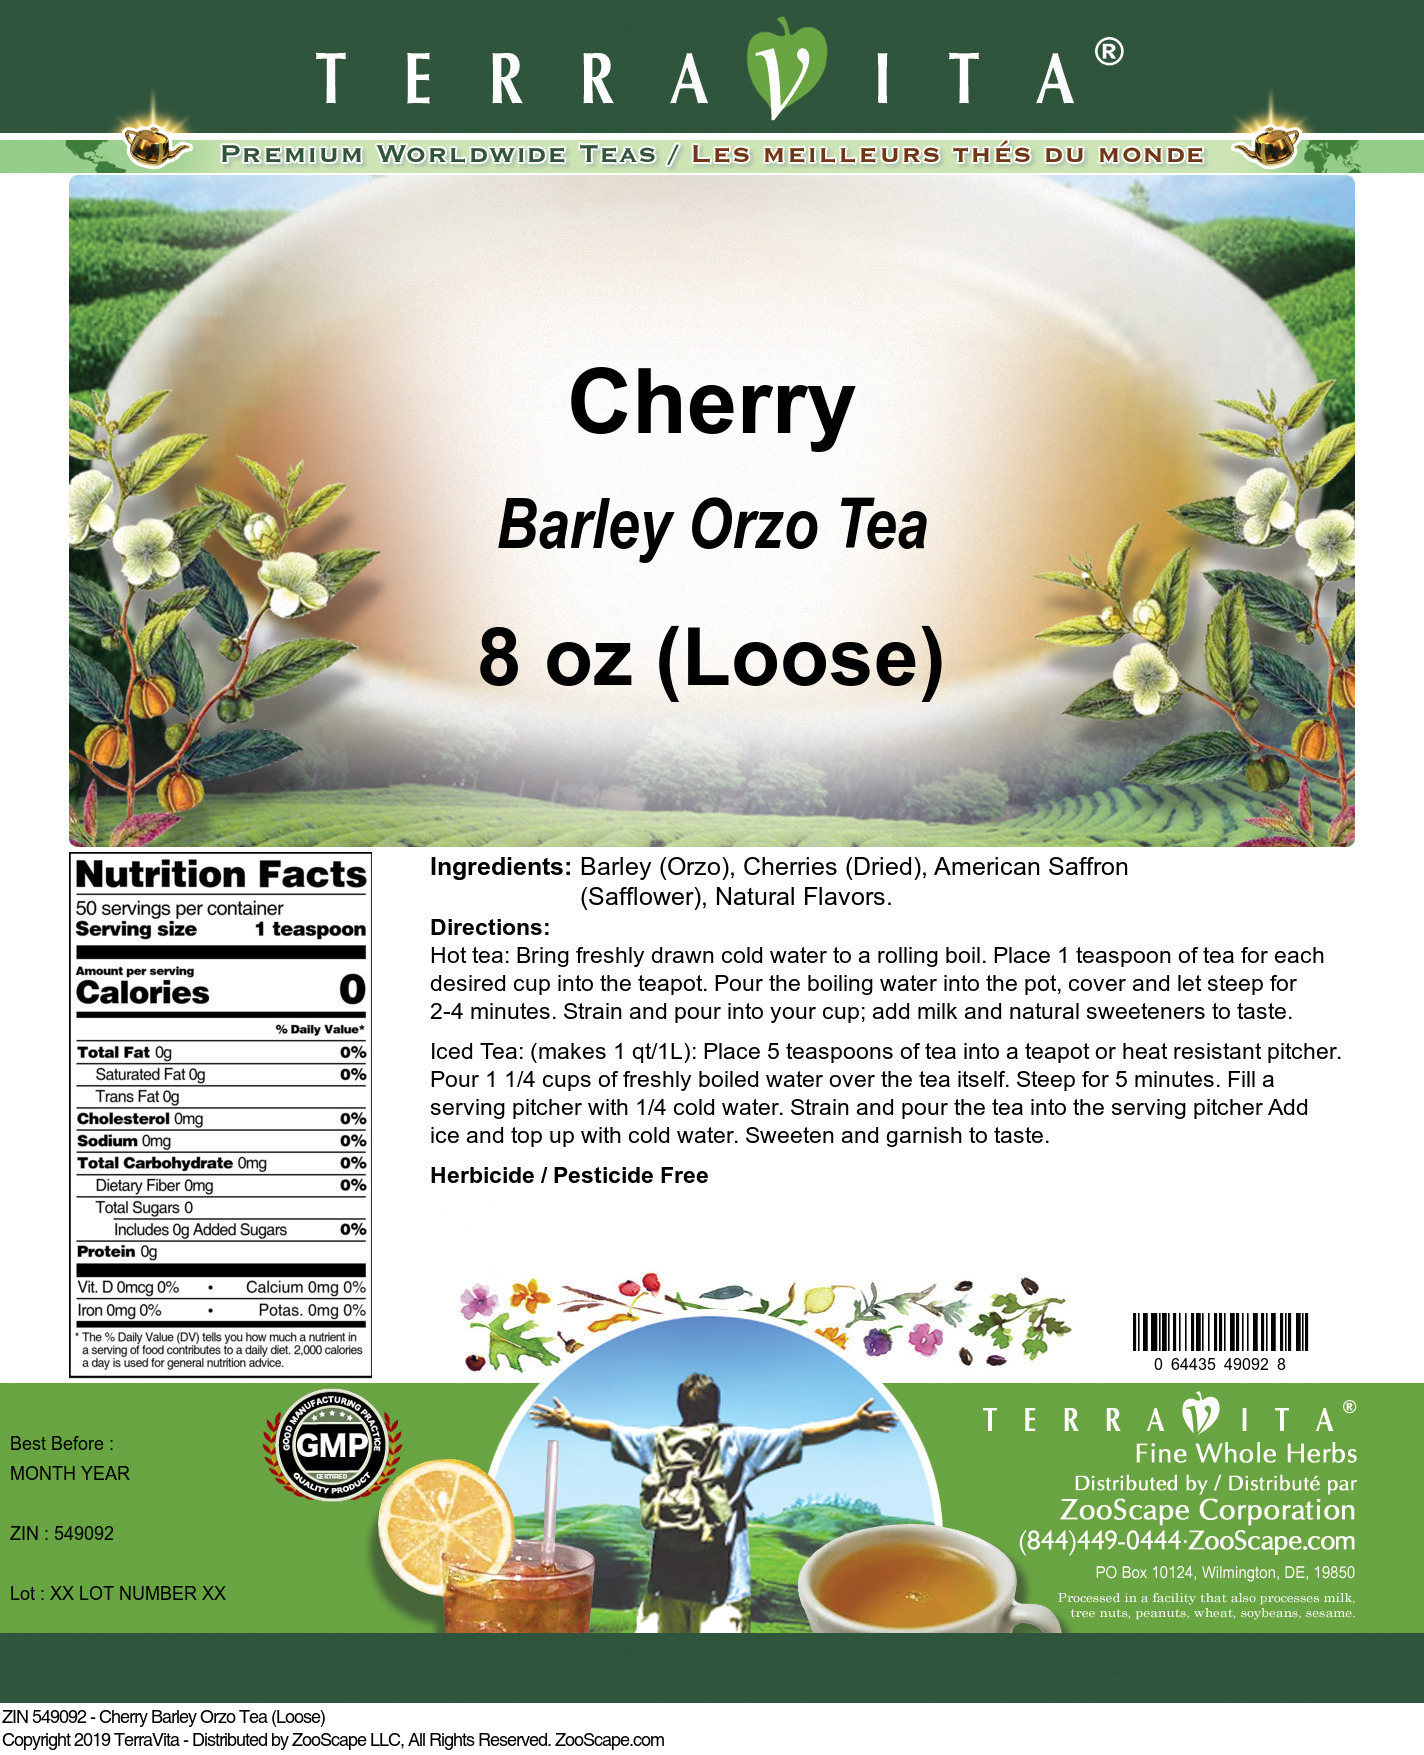 Cherry Barley Orzo Tea (Loose) - Label